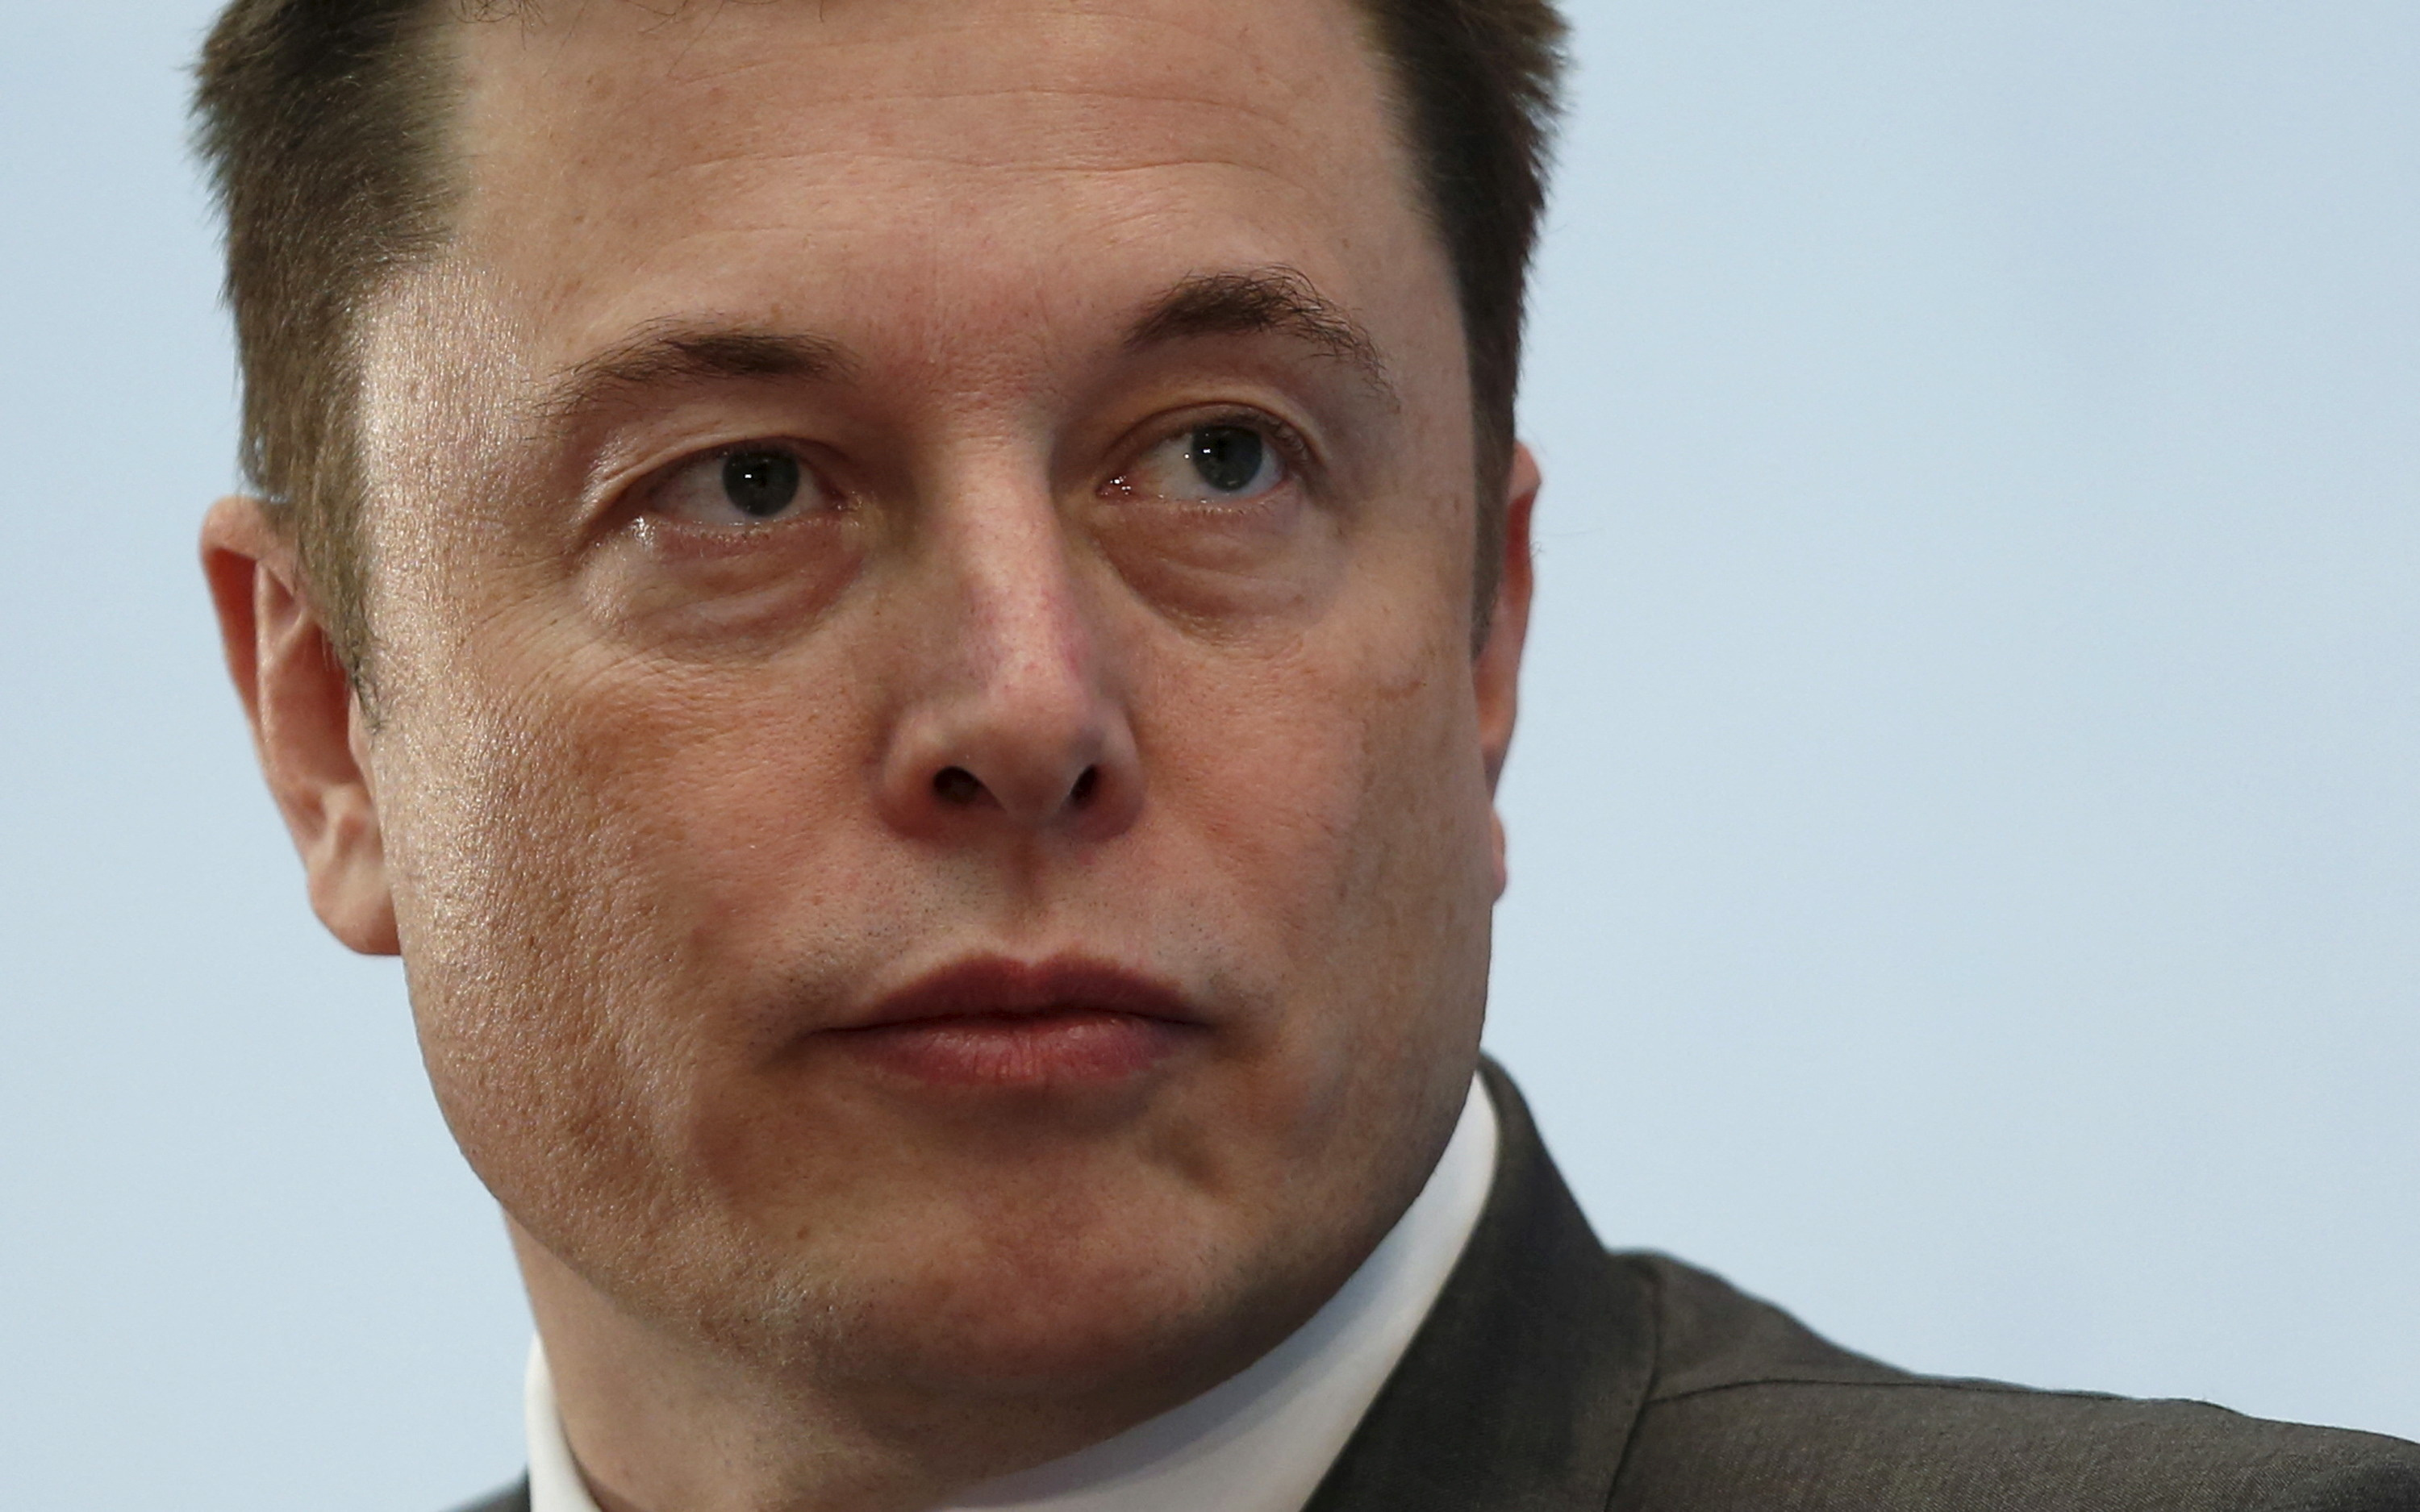 Tesla Chief Executive Elon Musk attends a forum on startups in Hong Kong